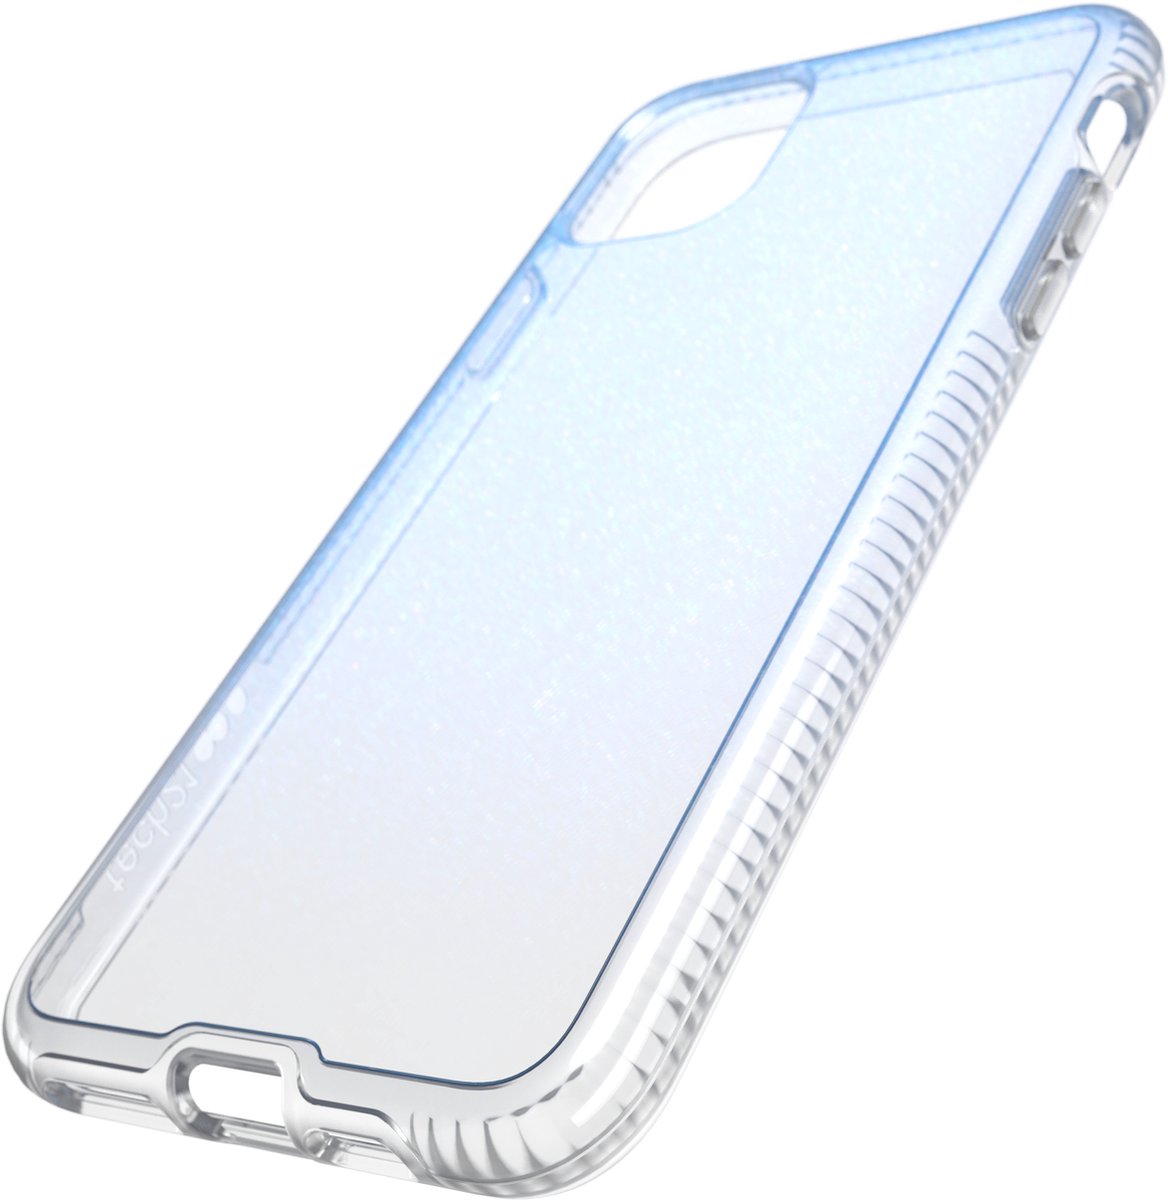 Tech21 Pure Schimmer iPhone 11 Pro Max Case Blue